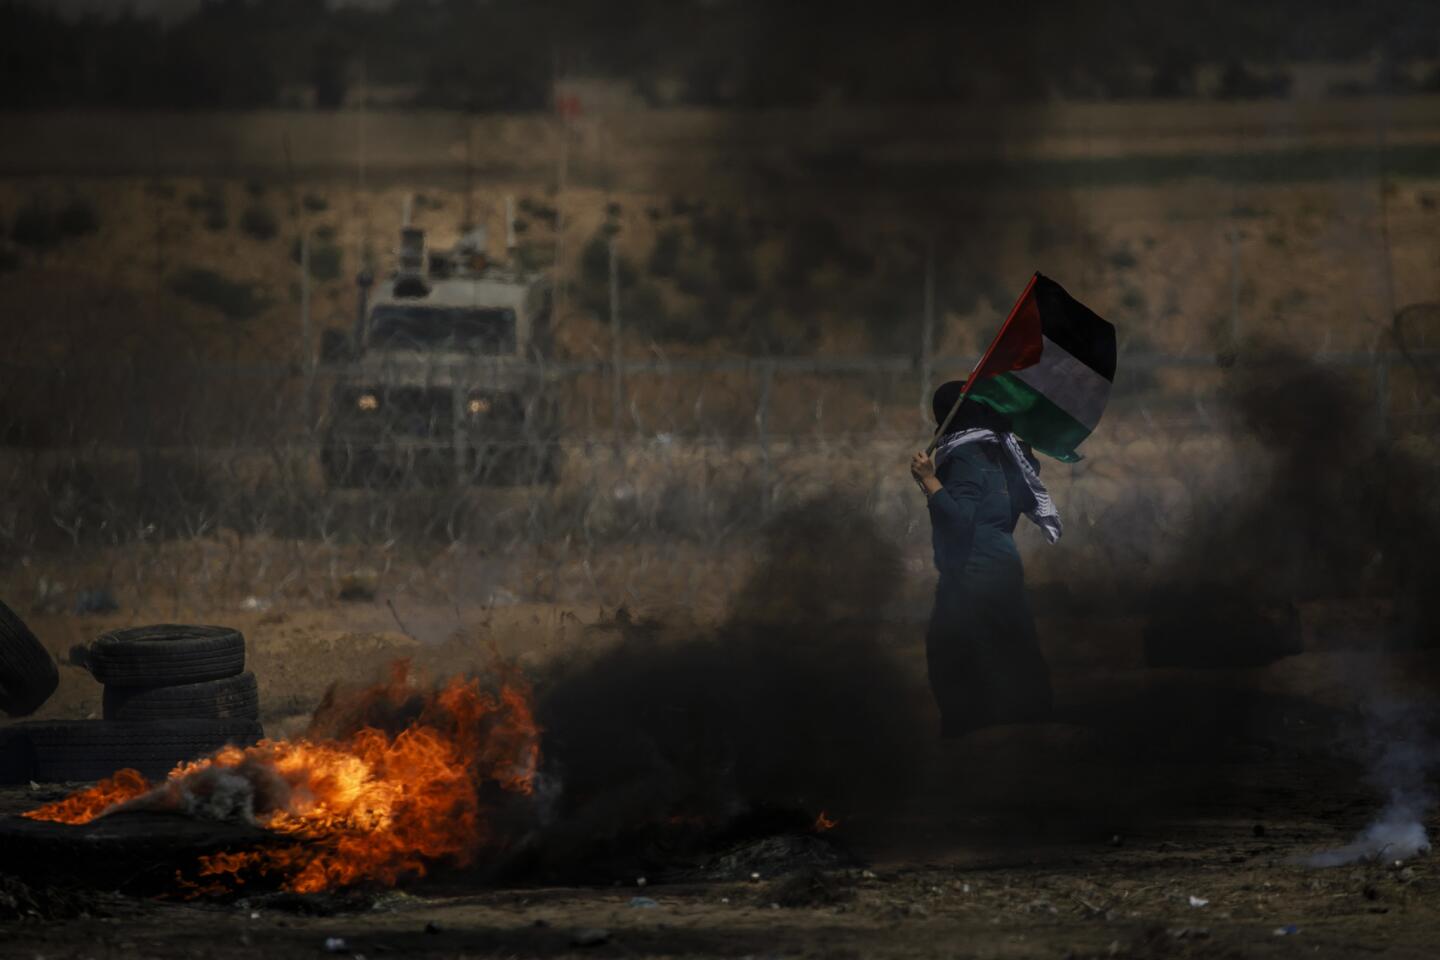 Gaza border protest